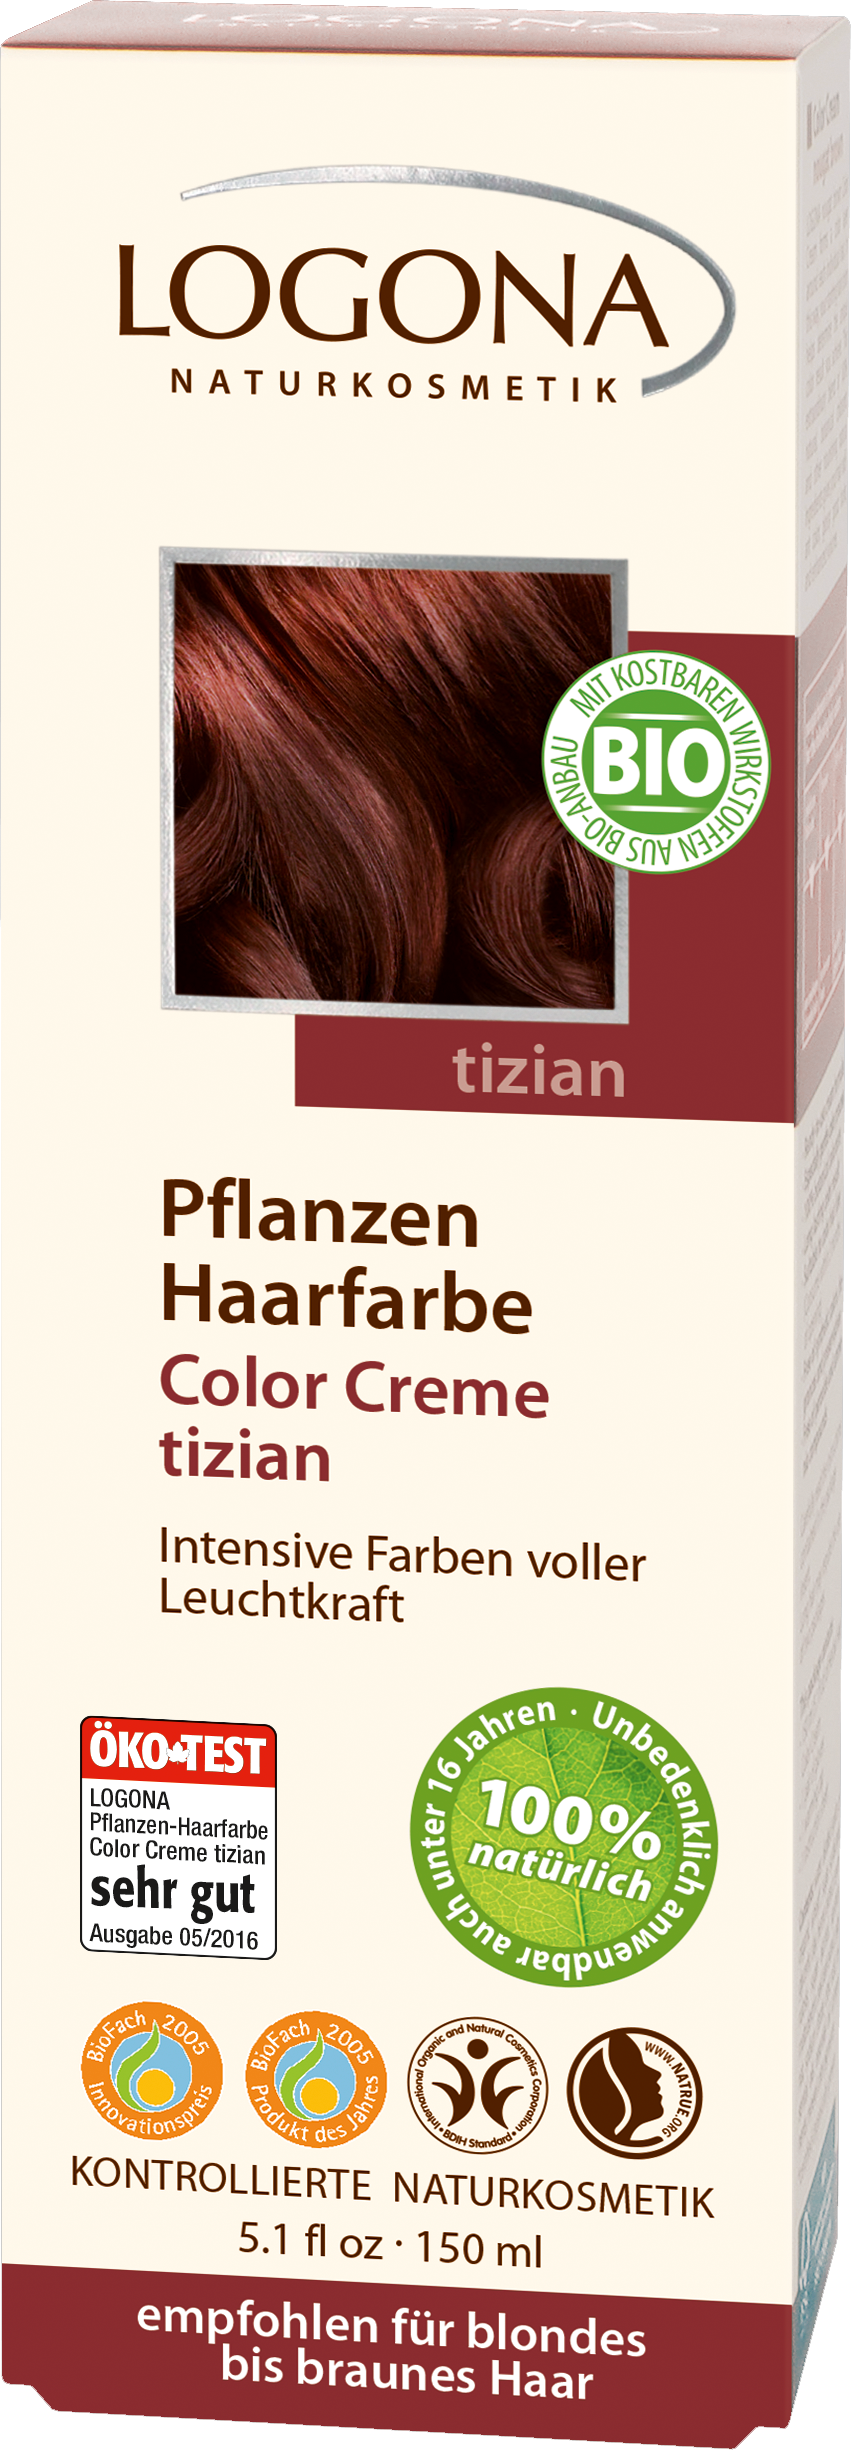 Color Creme herbal hair colour tizian | LOGONA Natural Cosmetics